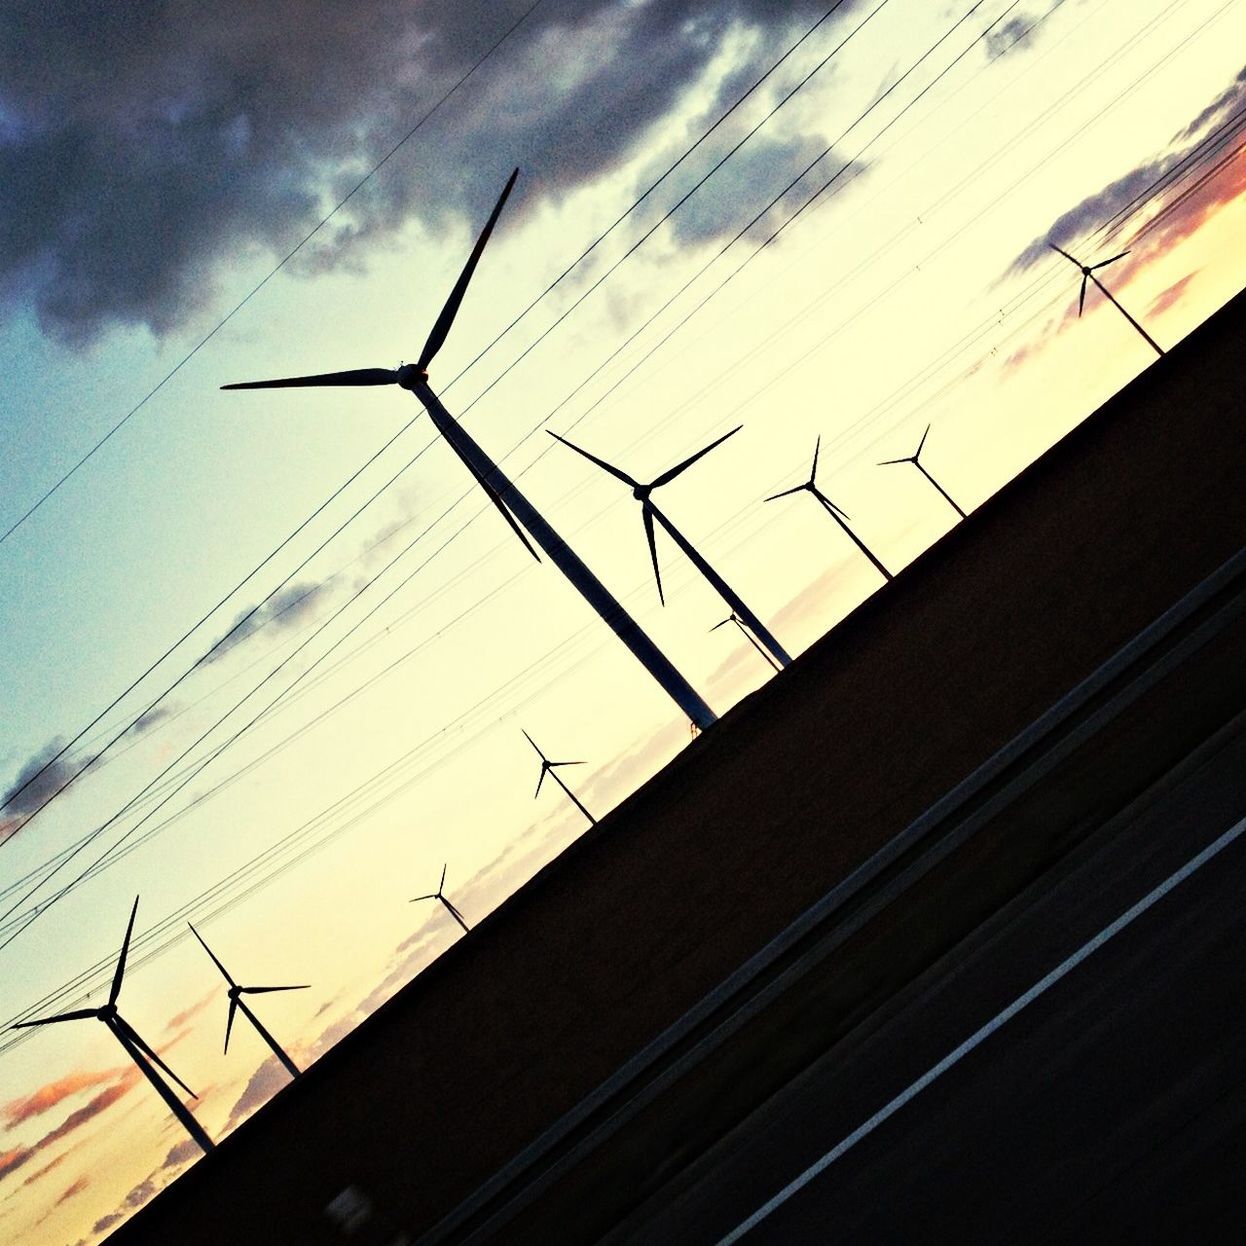 Silhouette wind turbines on landscape against sky at dusk